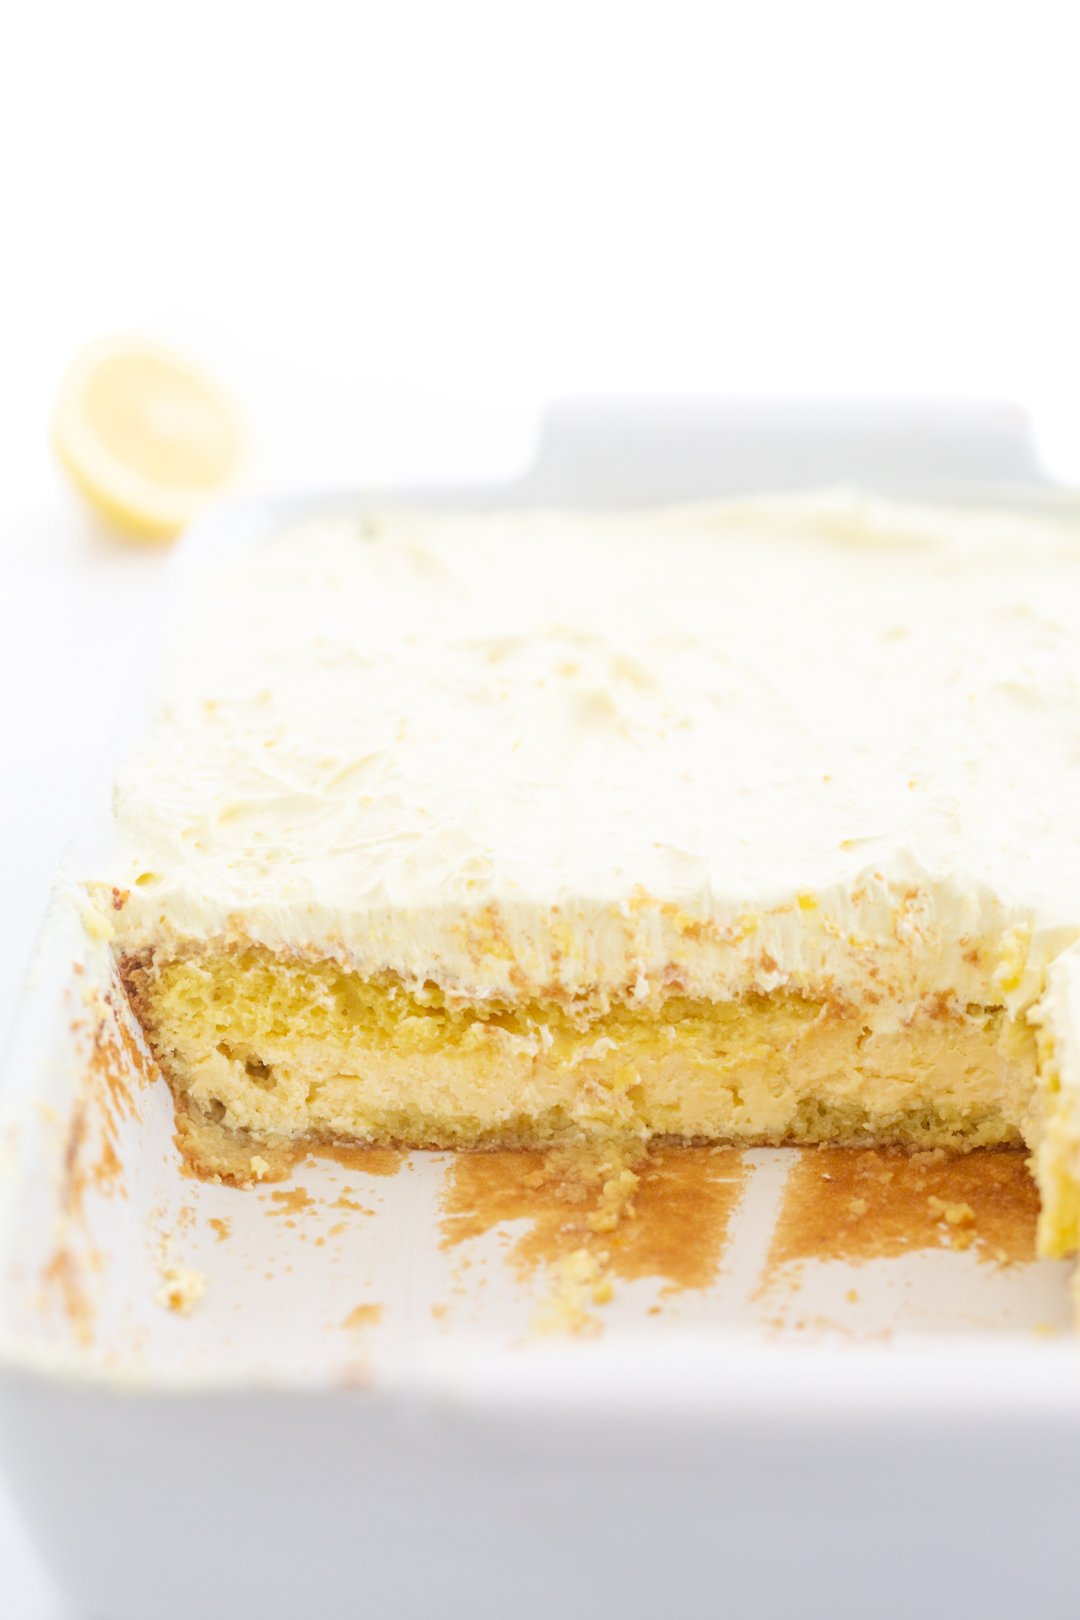 layered lemon cake in a baking dish. bottom ricotta cake layer, middle lemon cake mix layer and top layer lemon pudding frosting on top